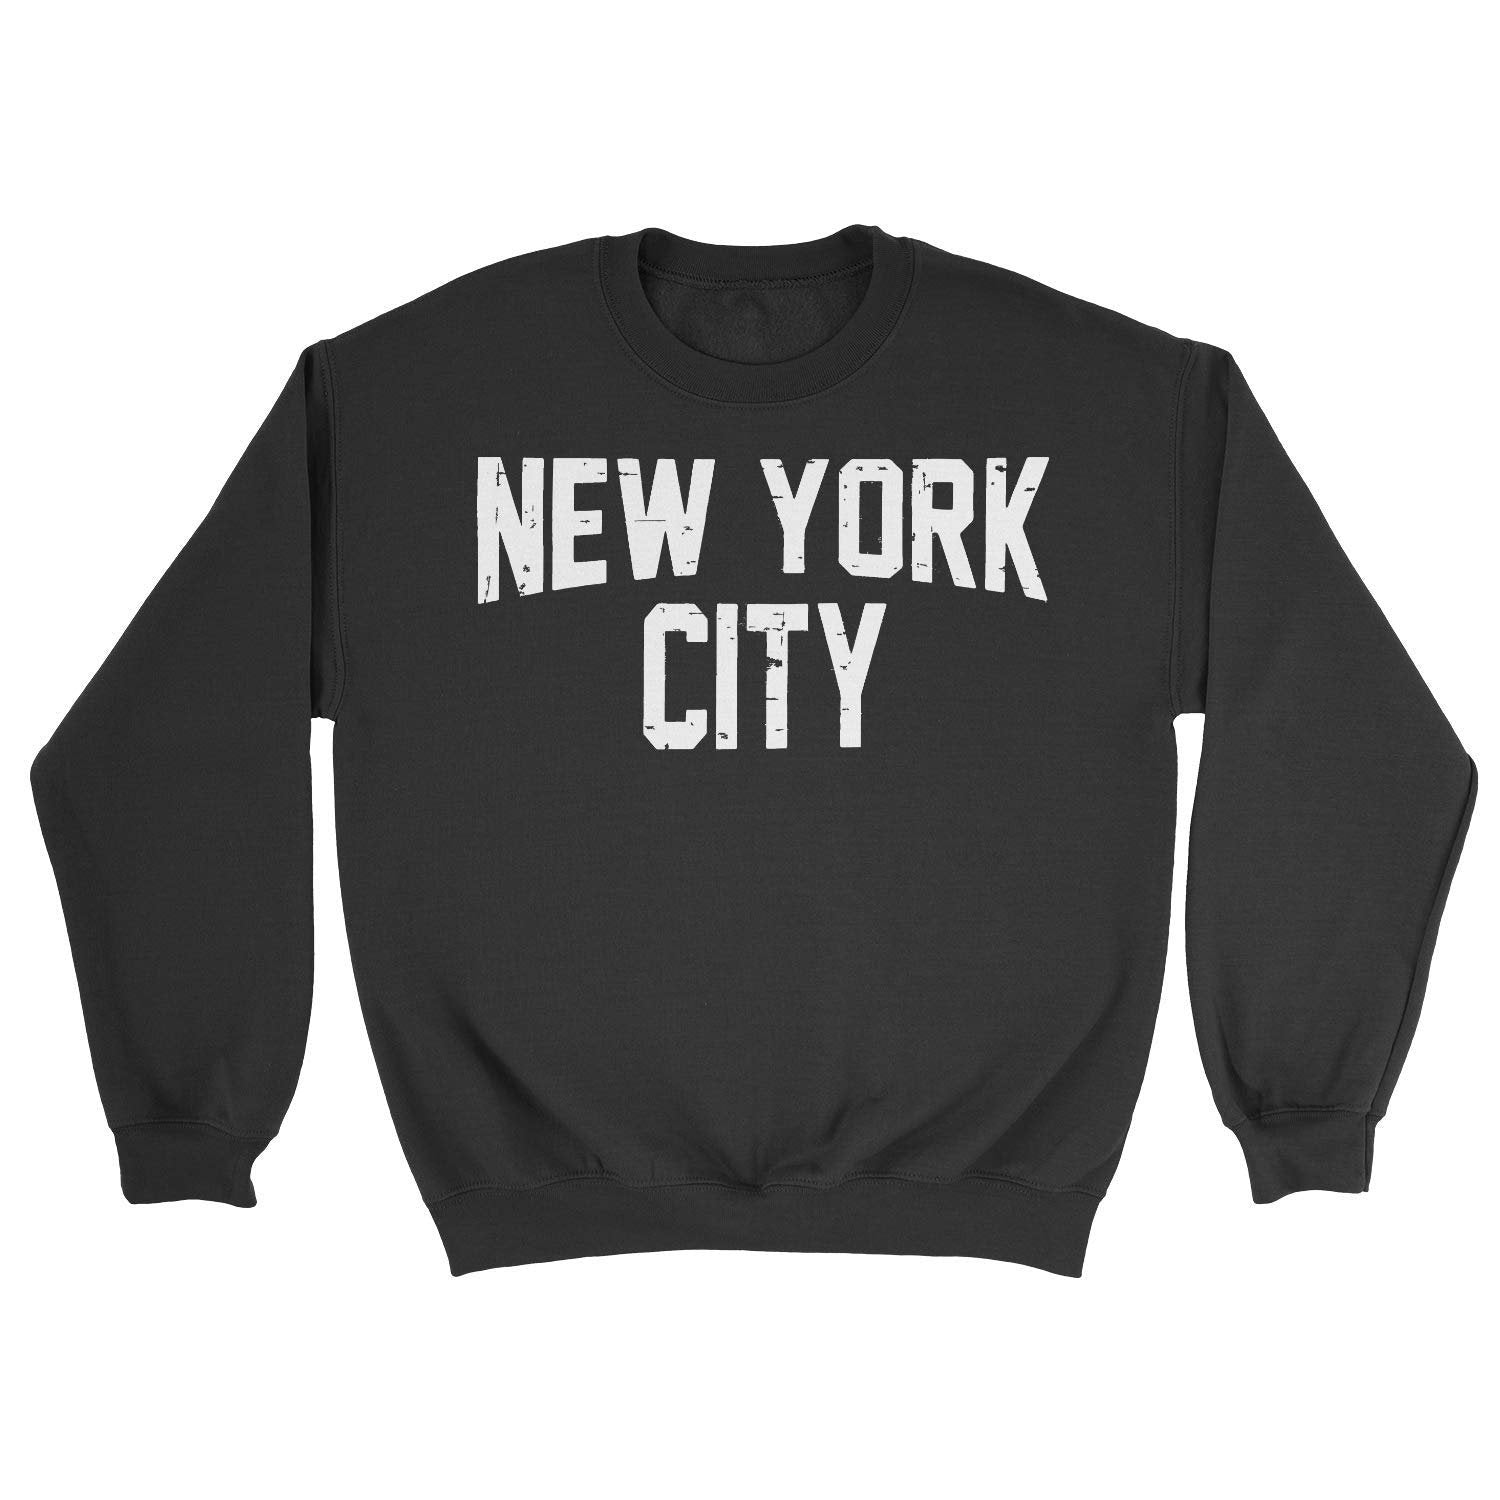 New York City Adult Unisex Crewneck Sweatshirt (Distressed Design, Black)